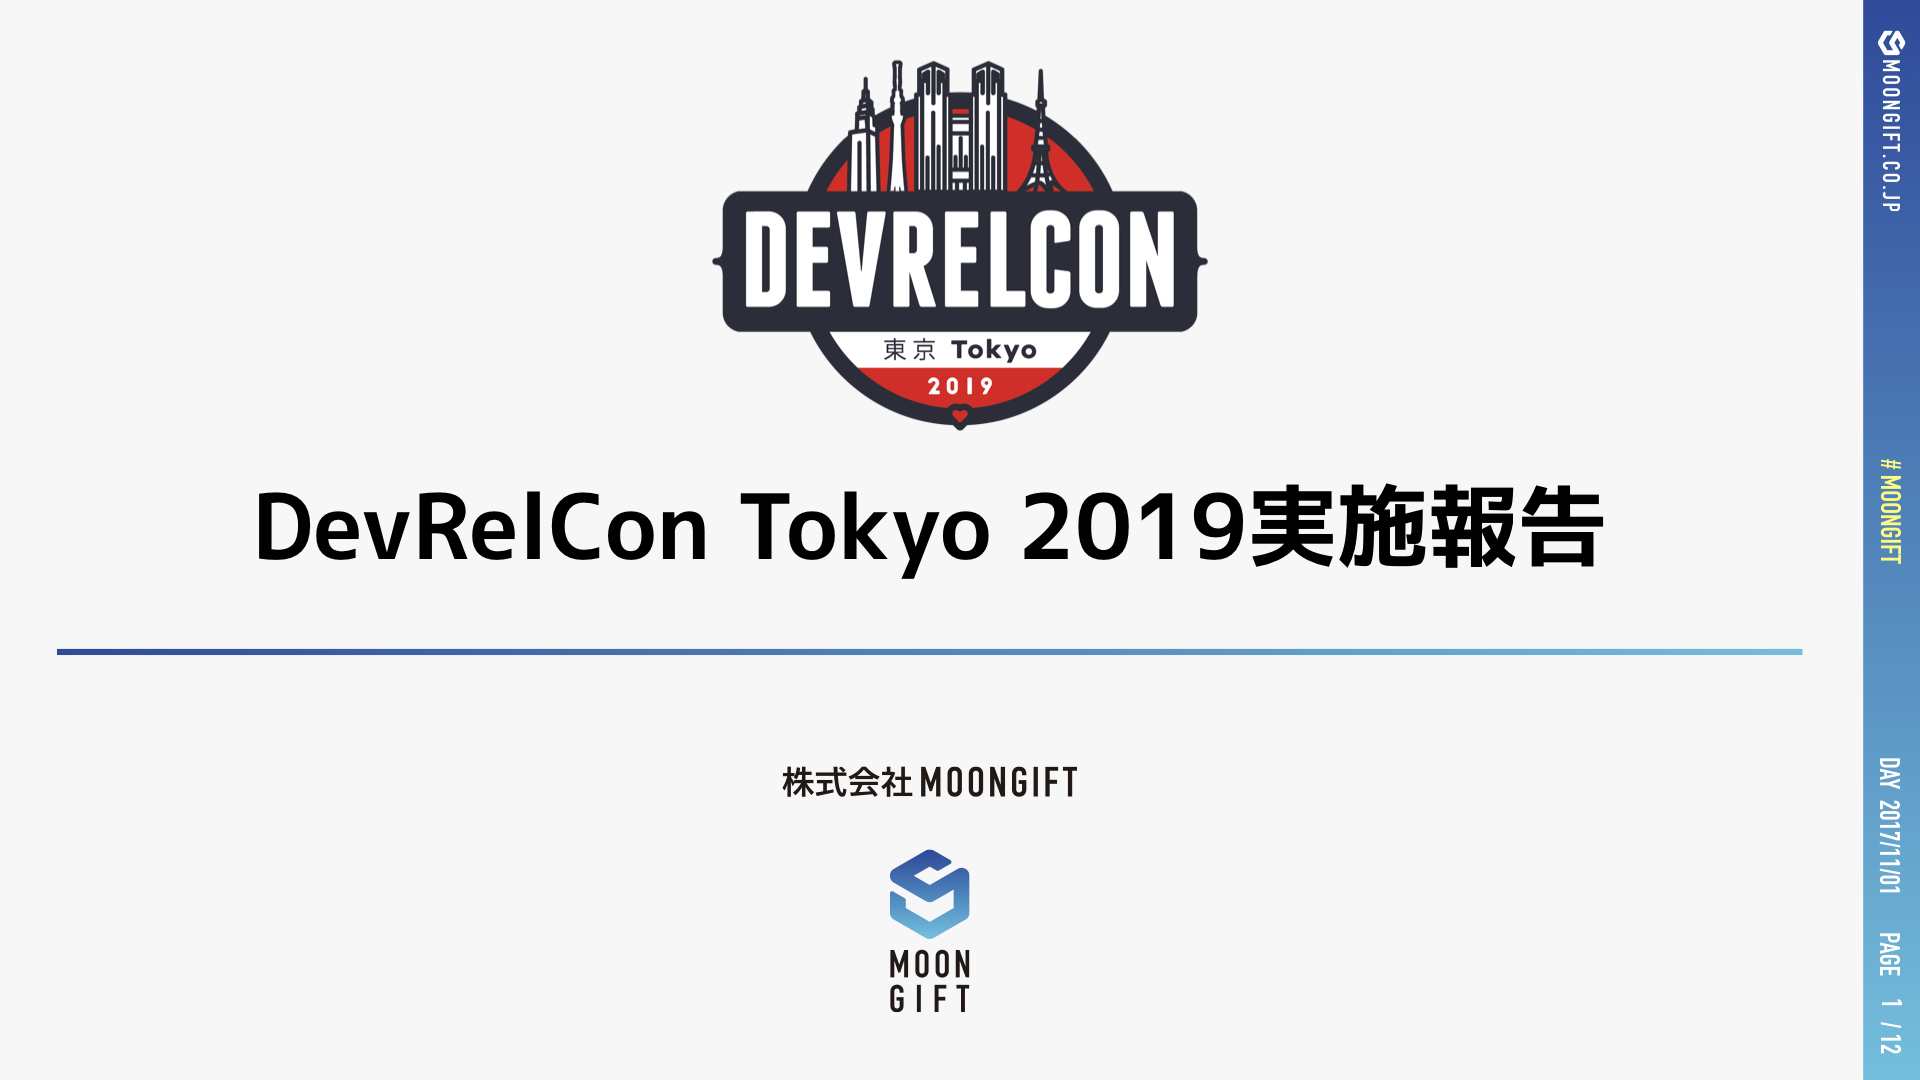 DevRelCon Tokyo 2019報告会を実施しました